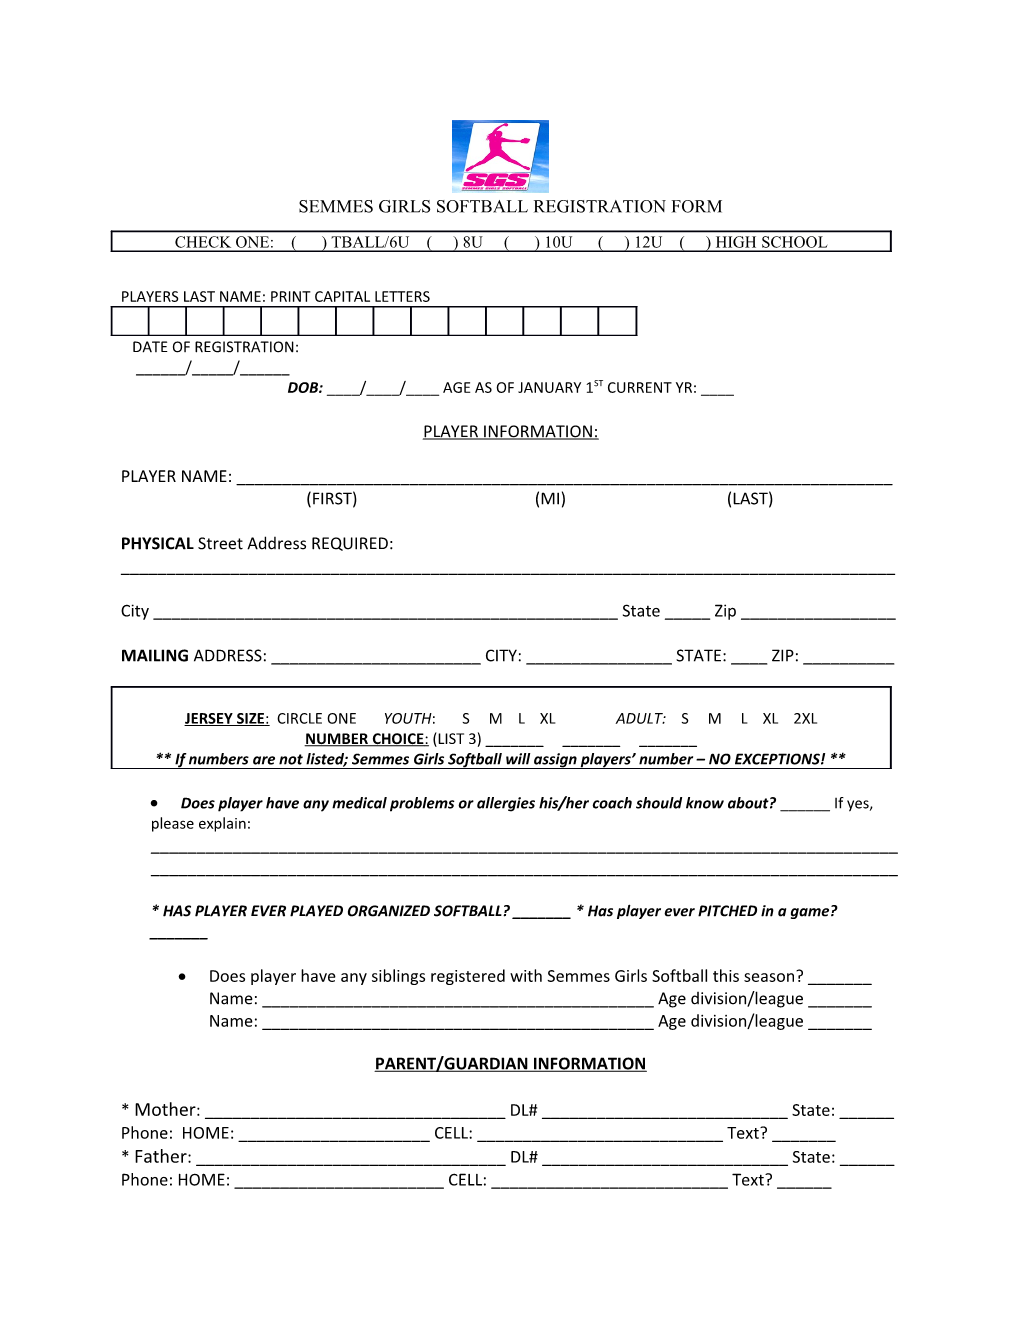 Semmes Girls Softball Registration Form